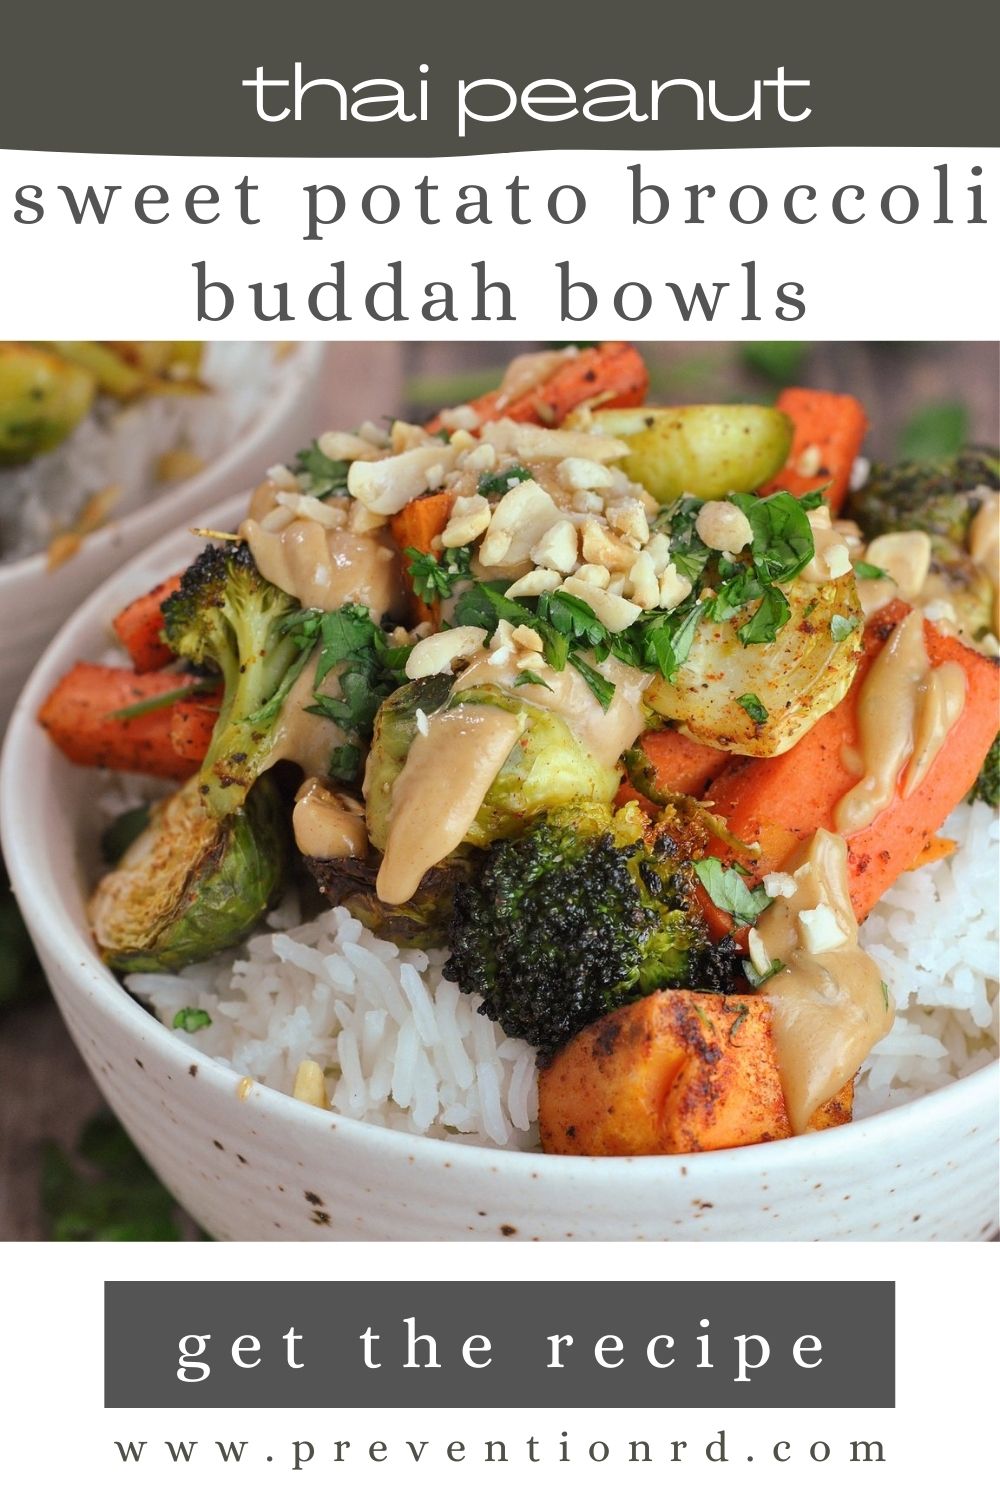 Thai Peanut Sweet Potato Broccoli Buddha Bowl via @preventionrd